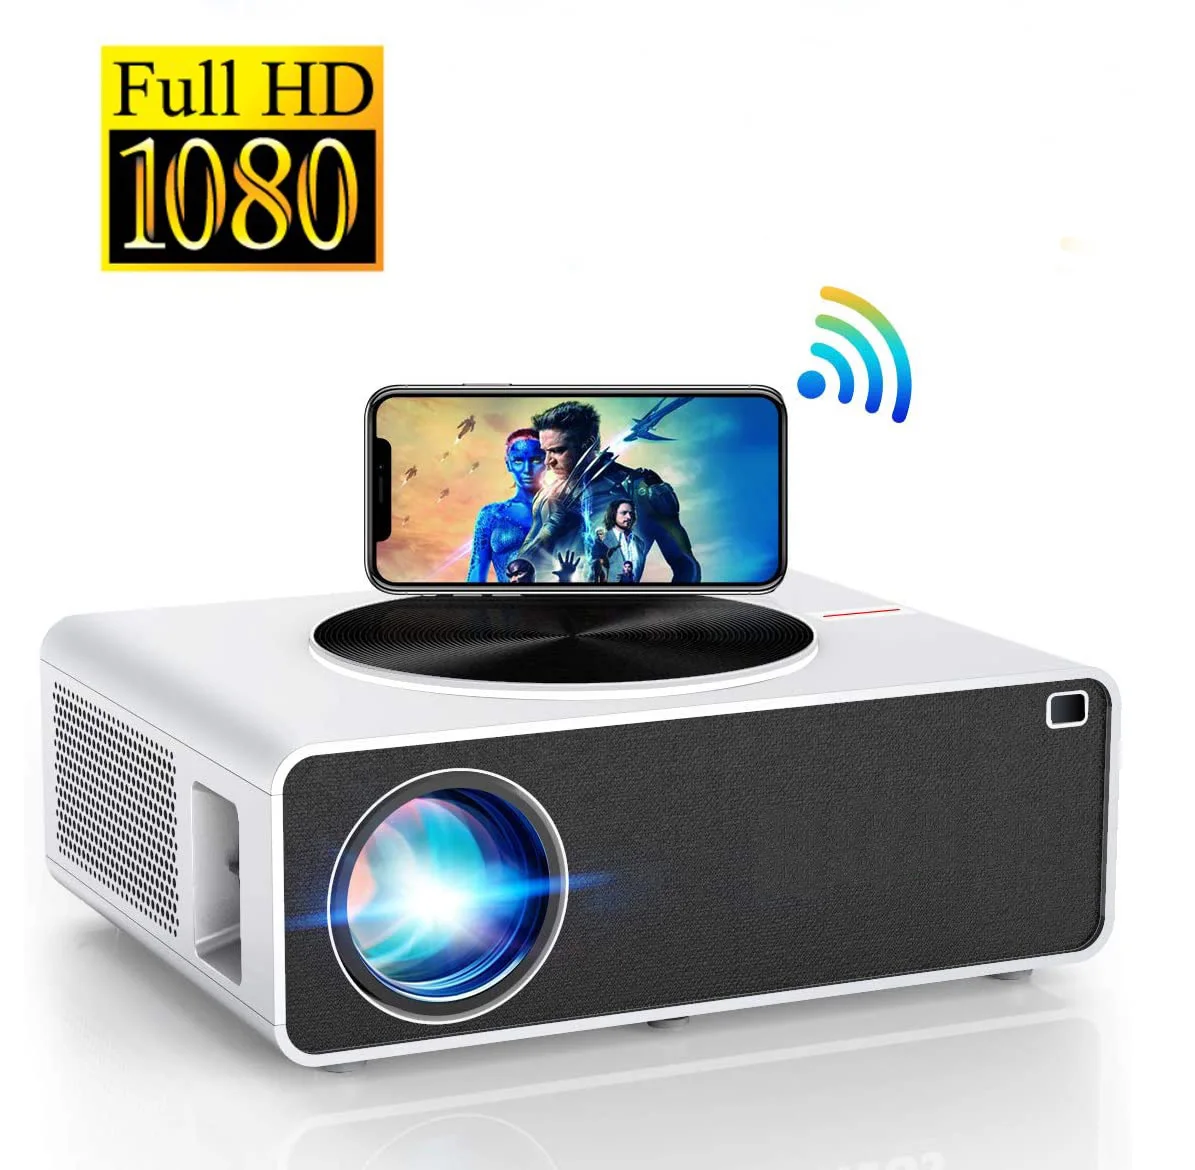 

4k 1080P Projector 7200 Lumens Full HD 300inch Portable LCD Home Theater Movie LED Projector Home Projector, White